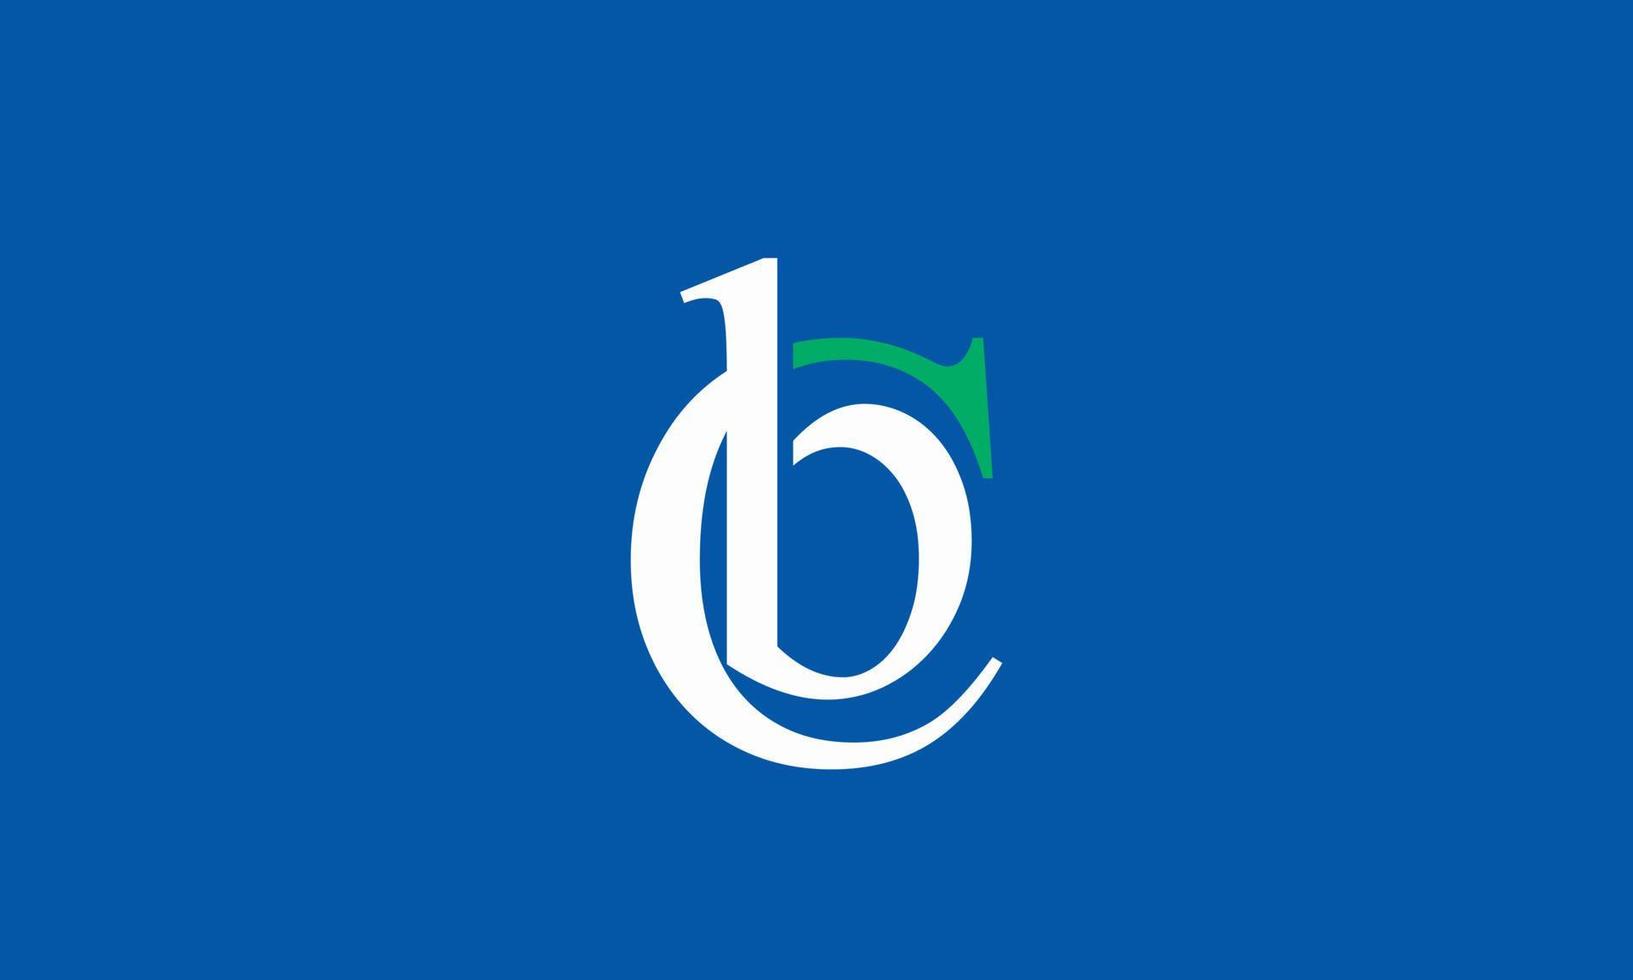 alfabet letters initialen monogram logo cb, bc, c en b vector